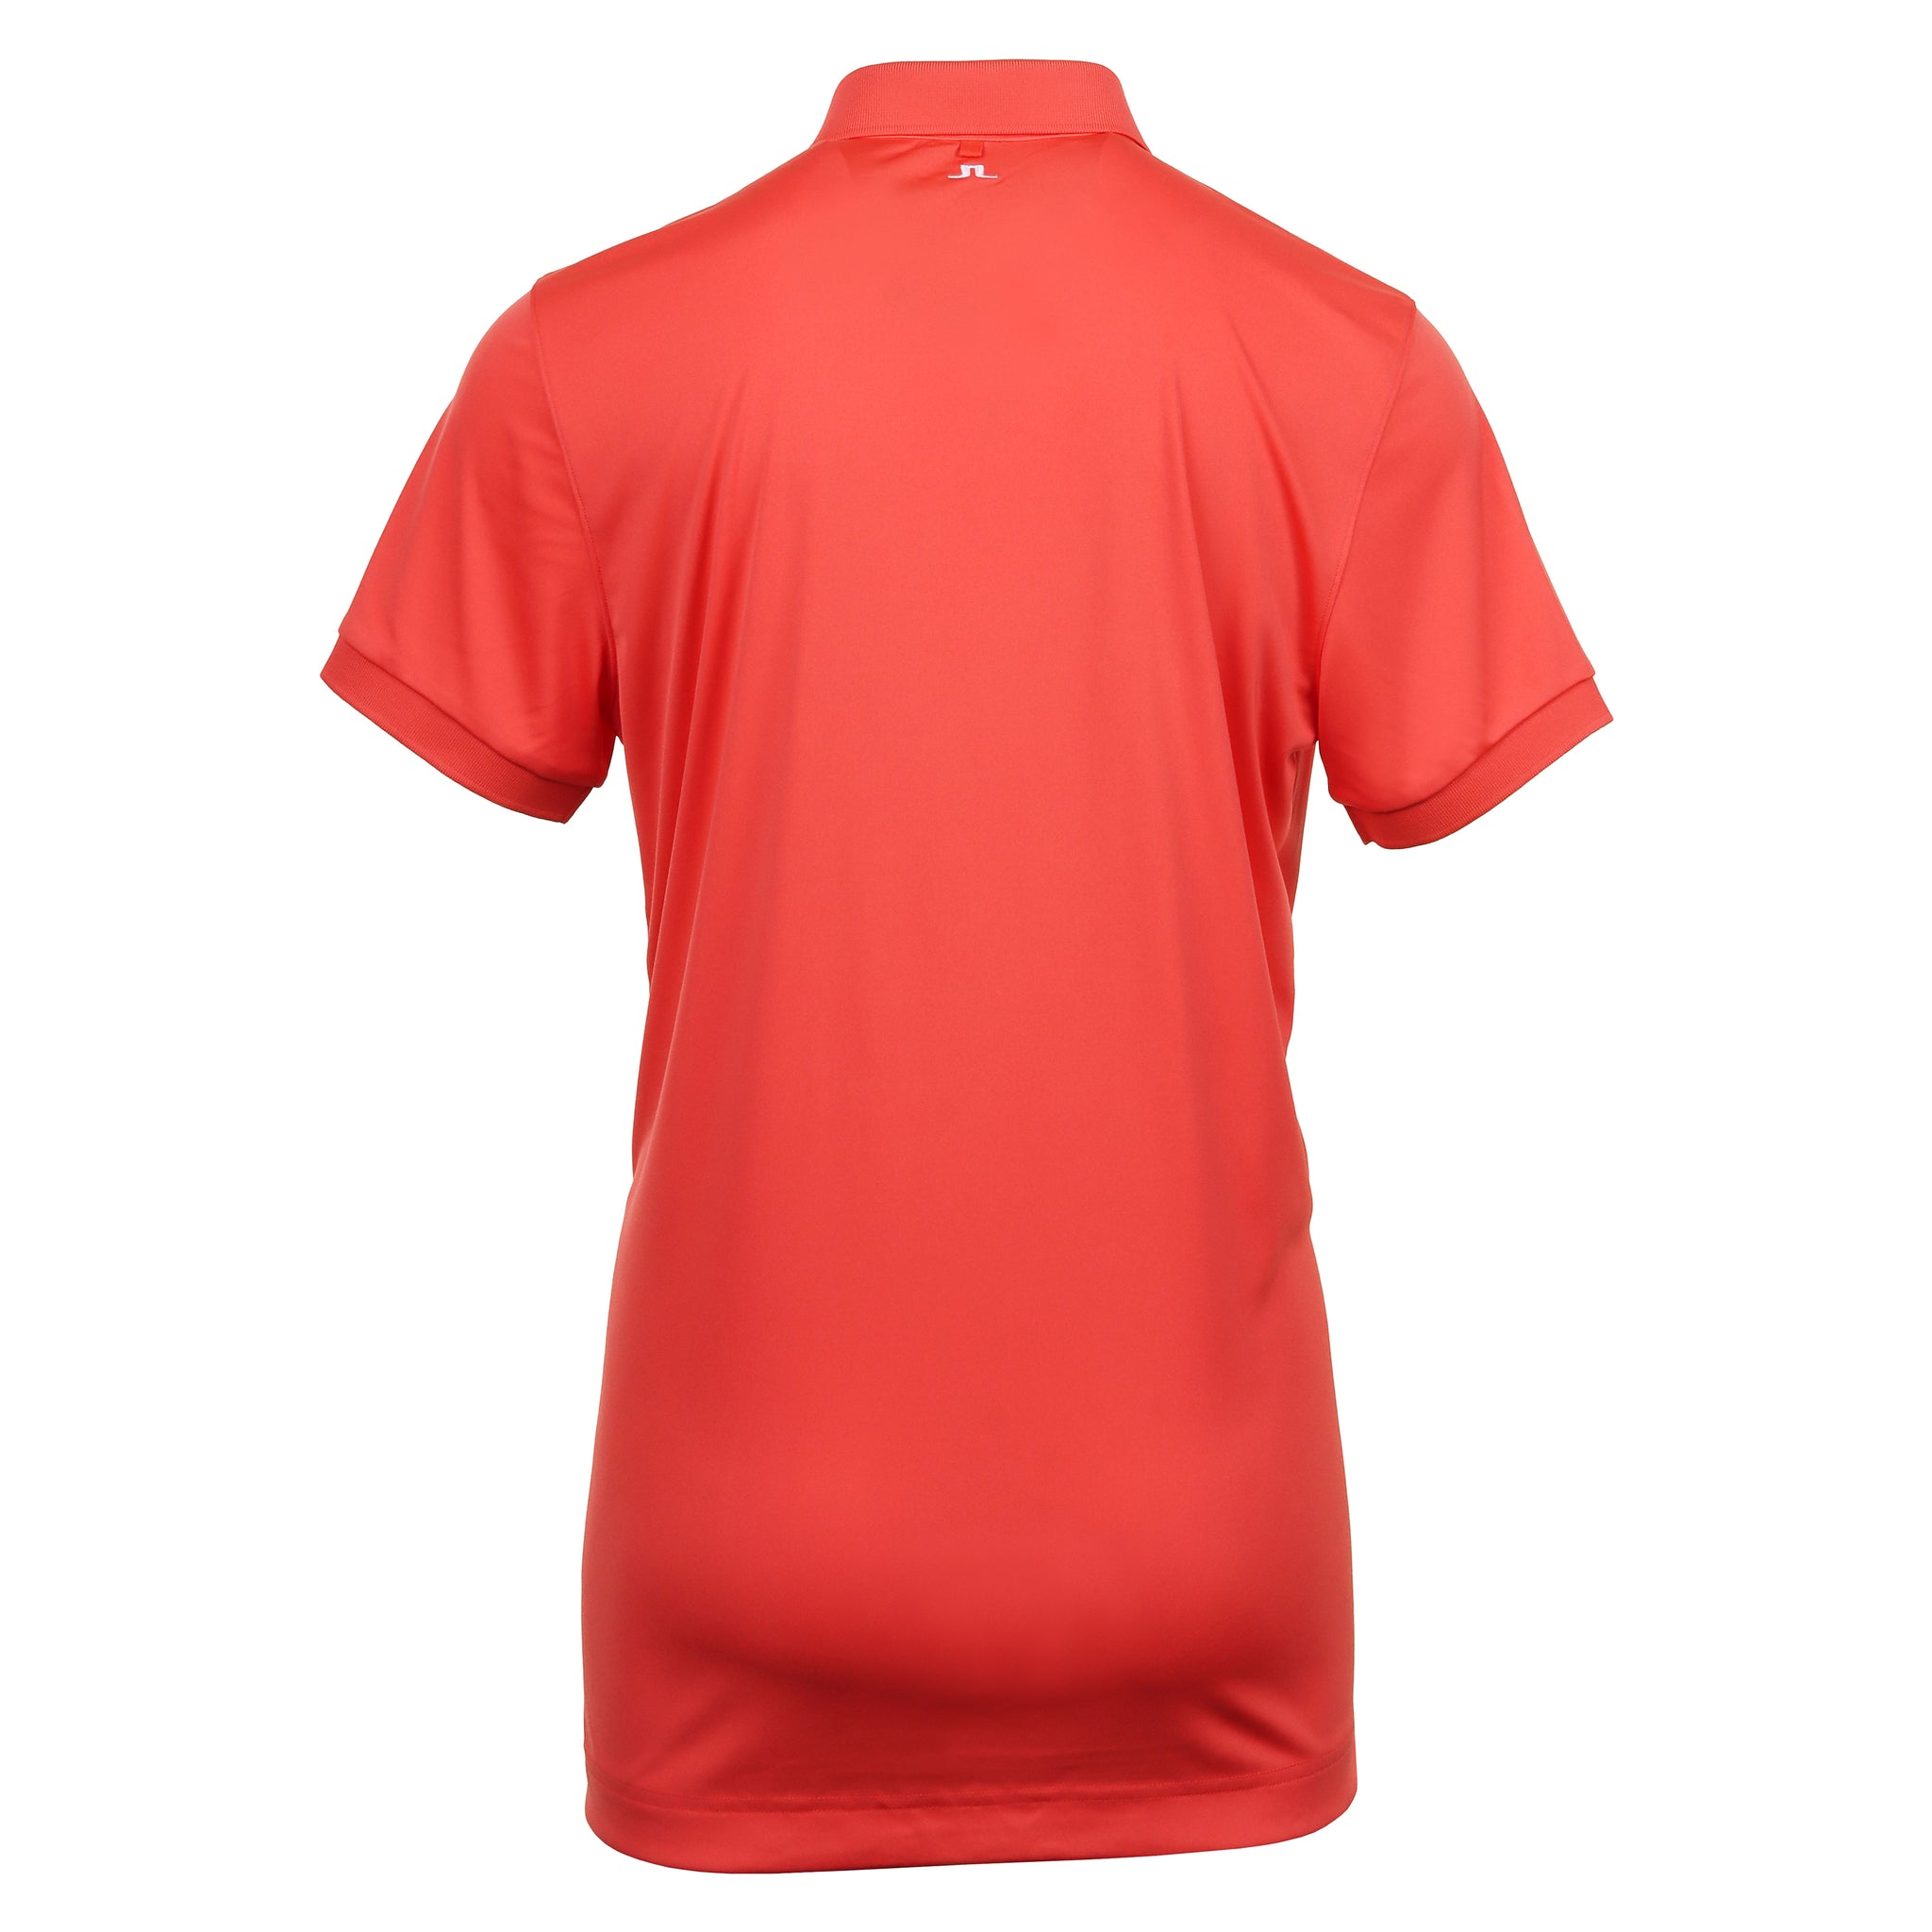 J.Lindeberg Golf Tour Tech Polo Shirt GMJT11232 Hot Coral G050 ...